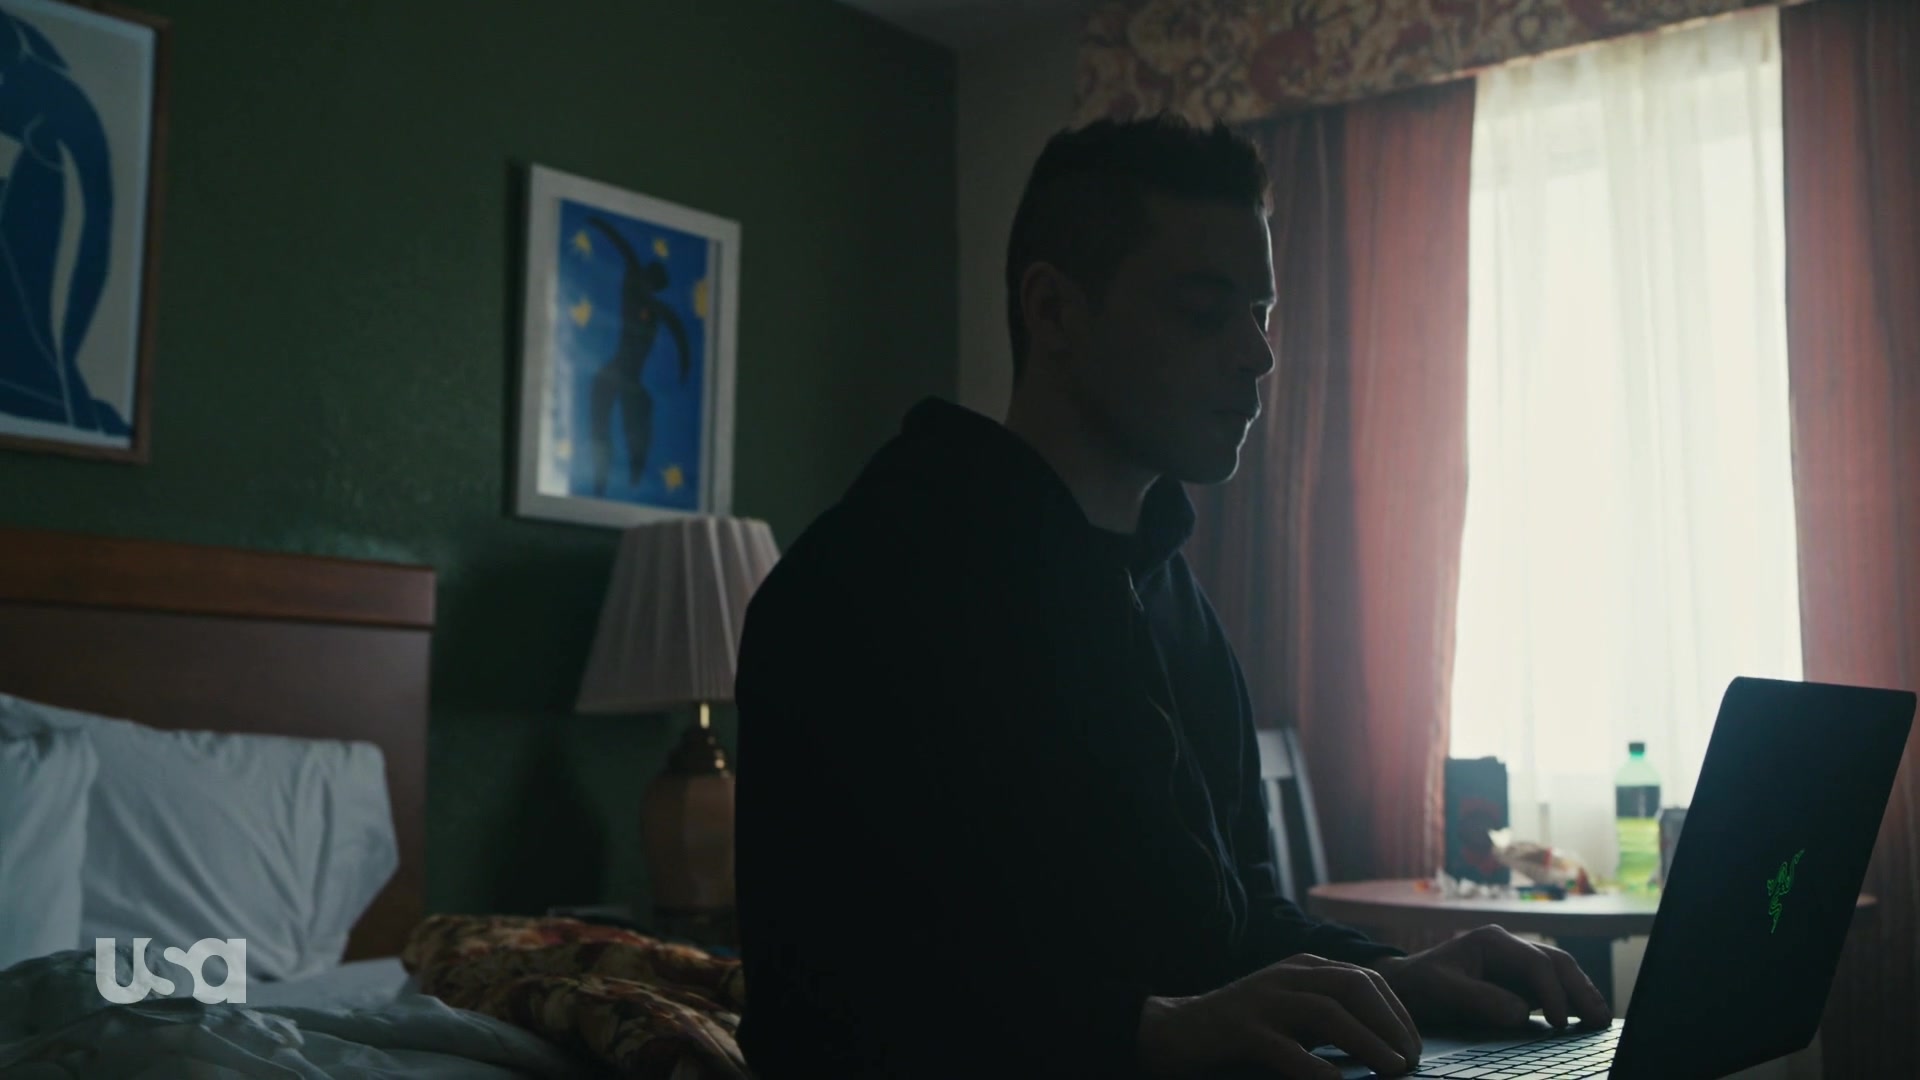 Razer Laptop Used Rami Malek As Vigilante Elliot Alderson In Mr. Robot Season 4 Episode 10 "410 Gone" (2019)